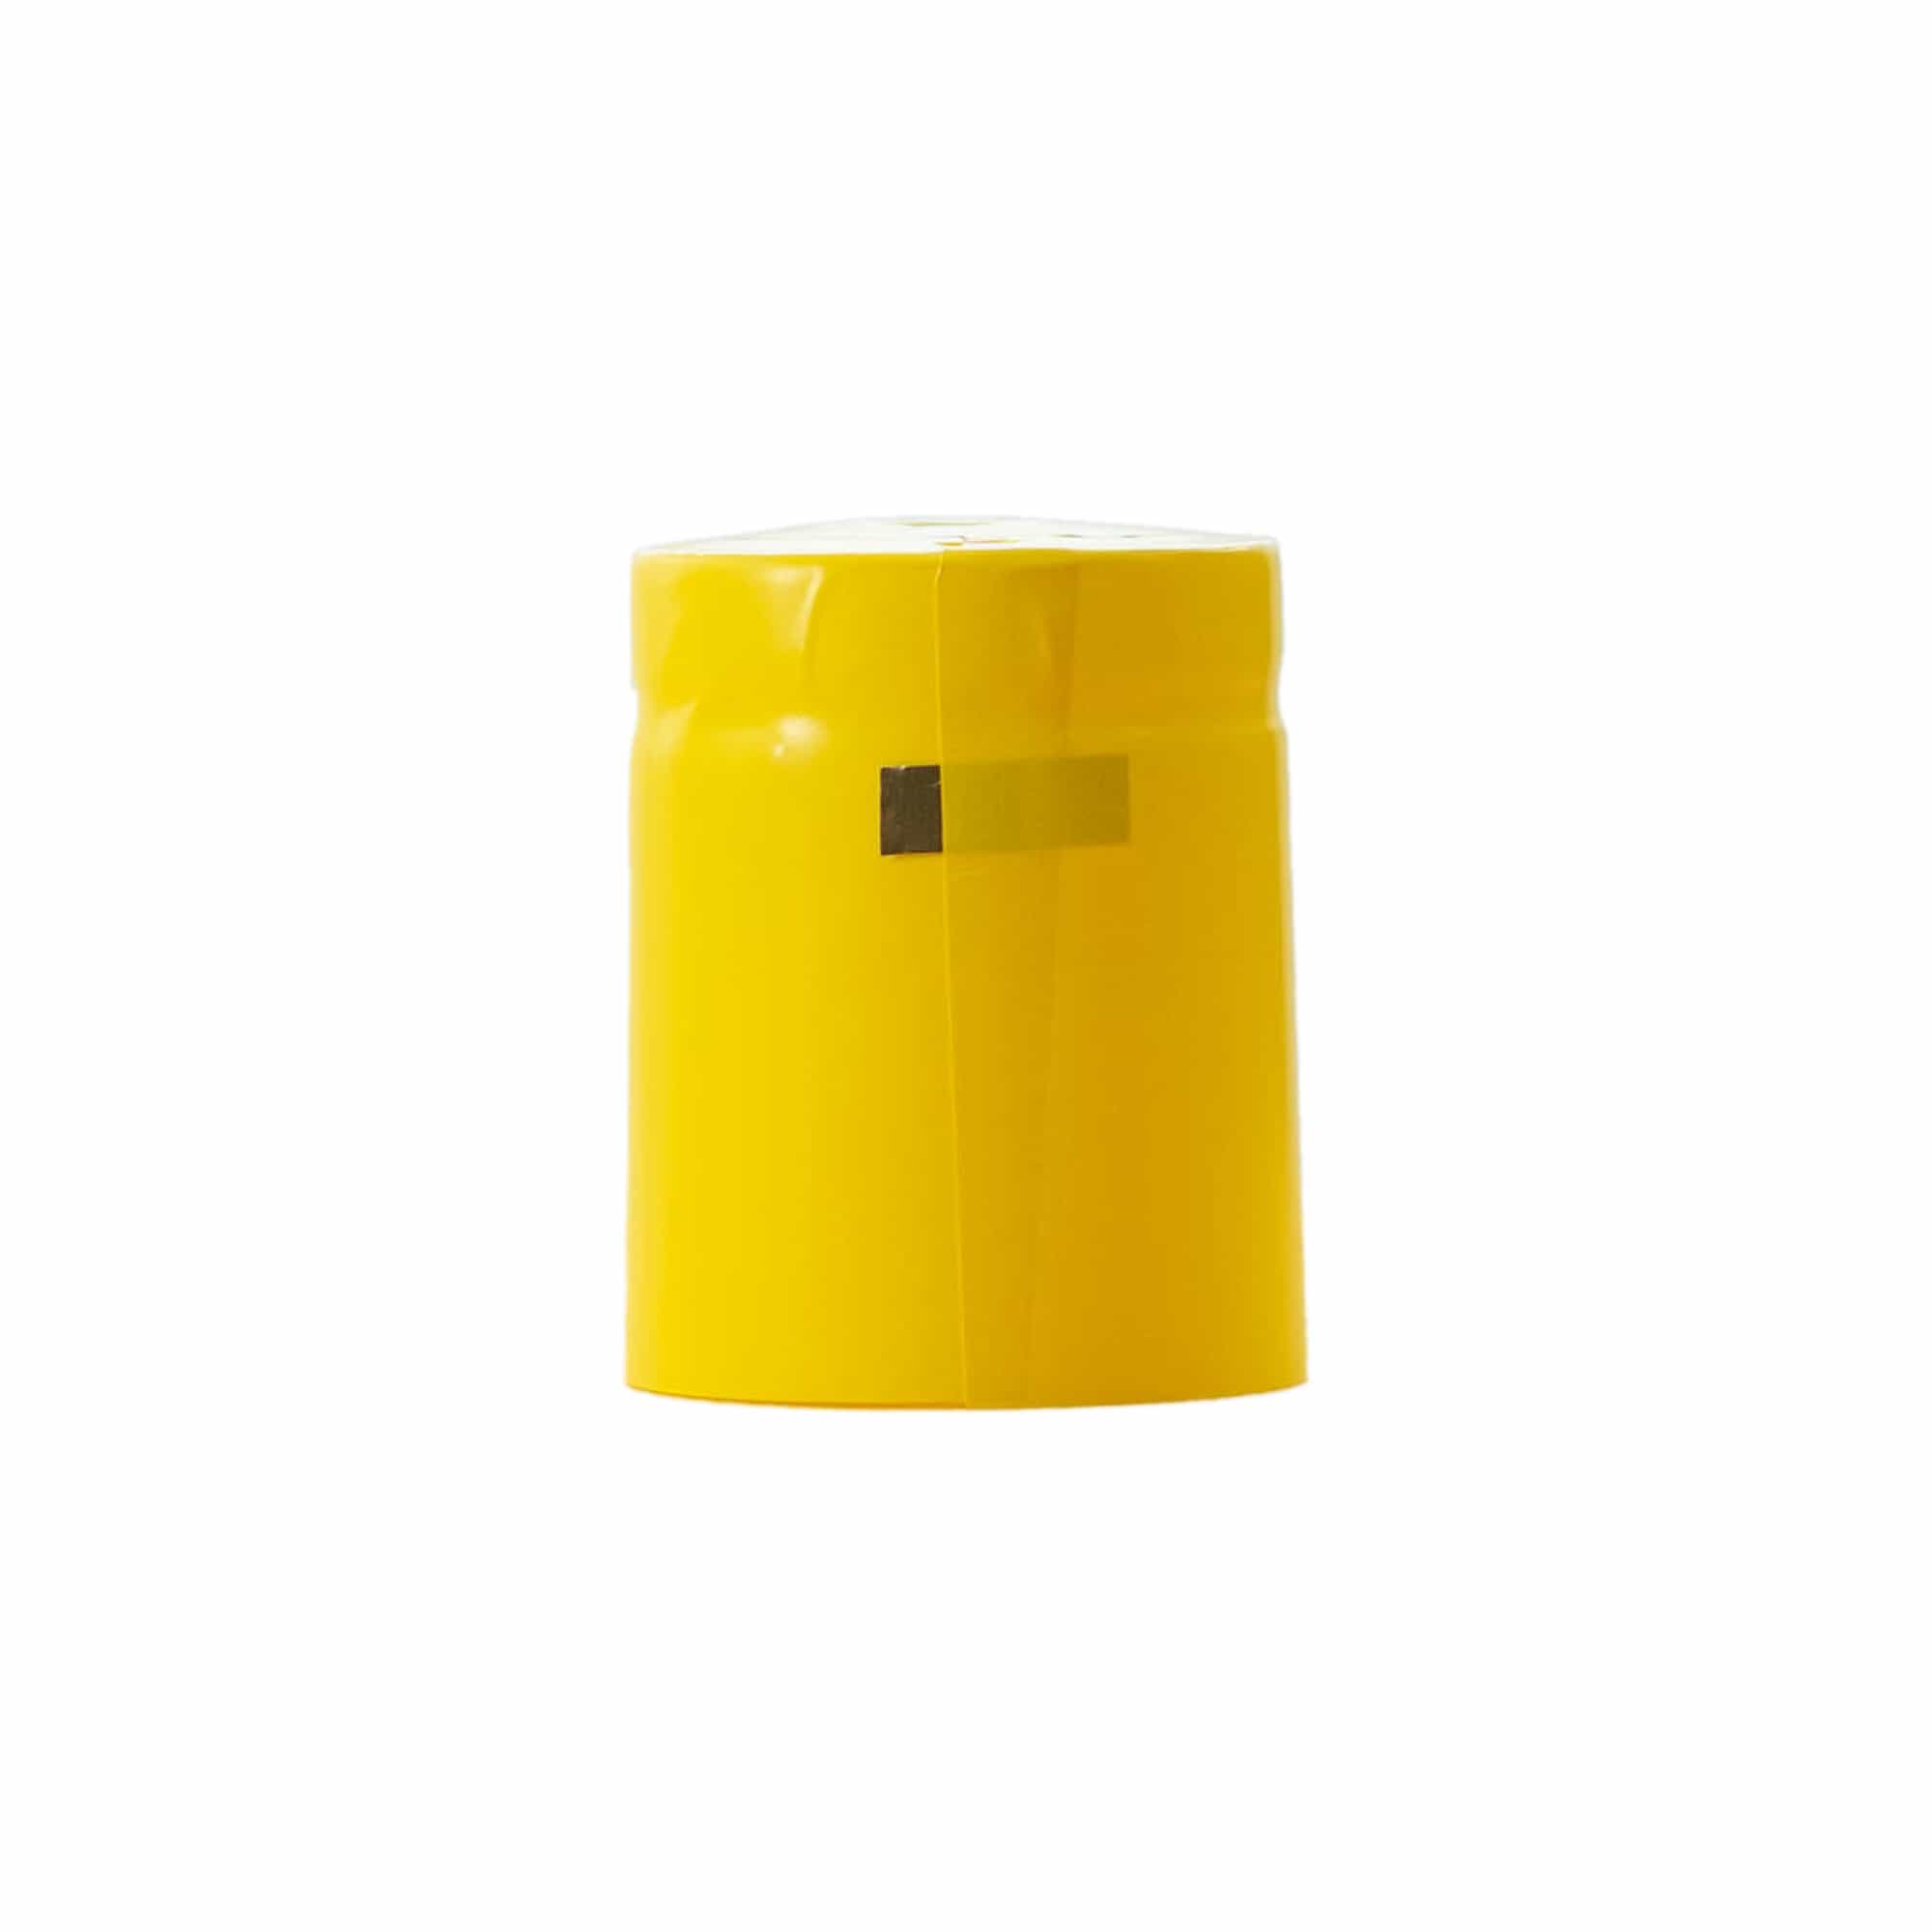 Heat shrink capsule 32x41, PVC plastic, yellow